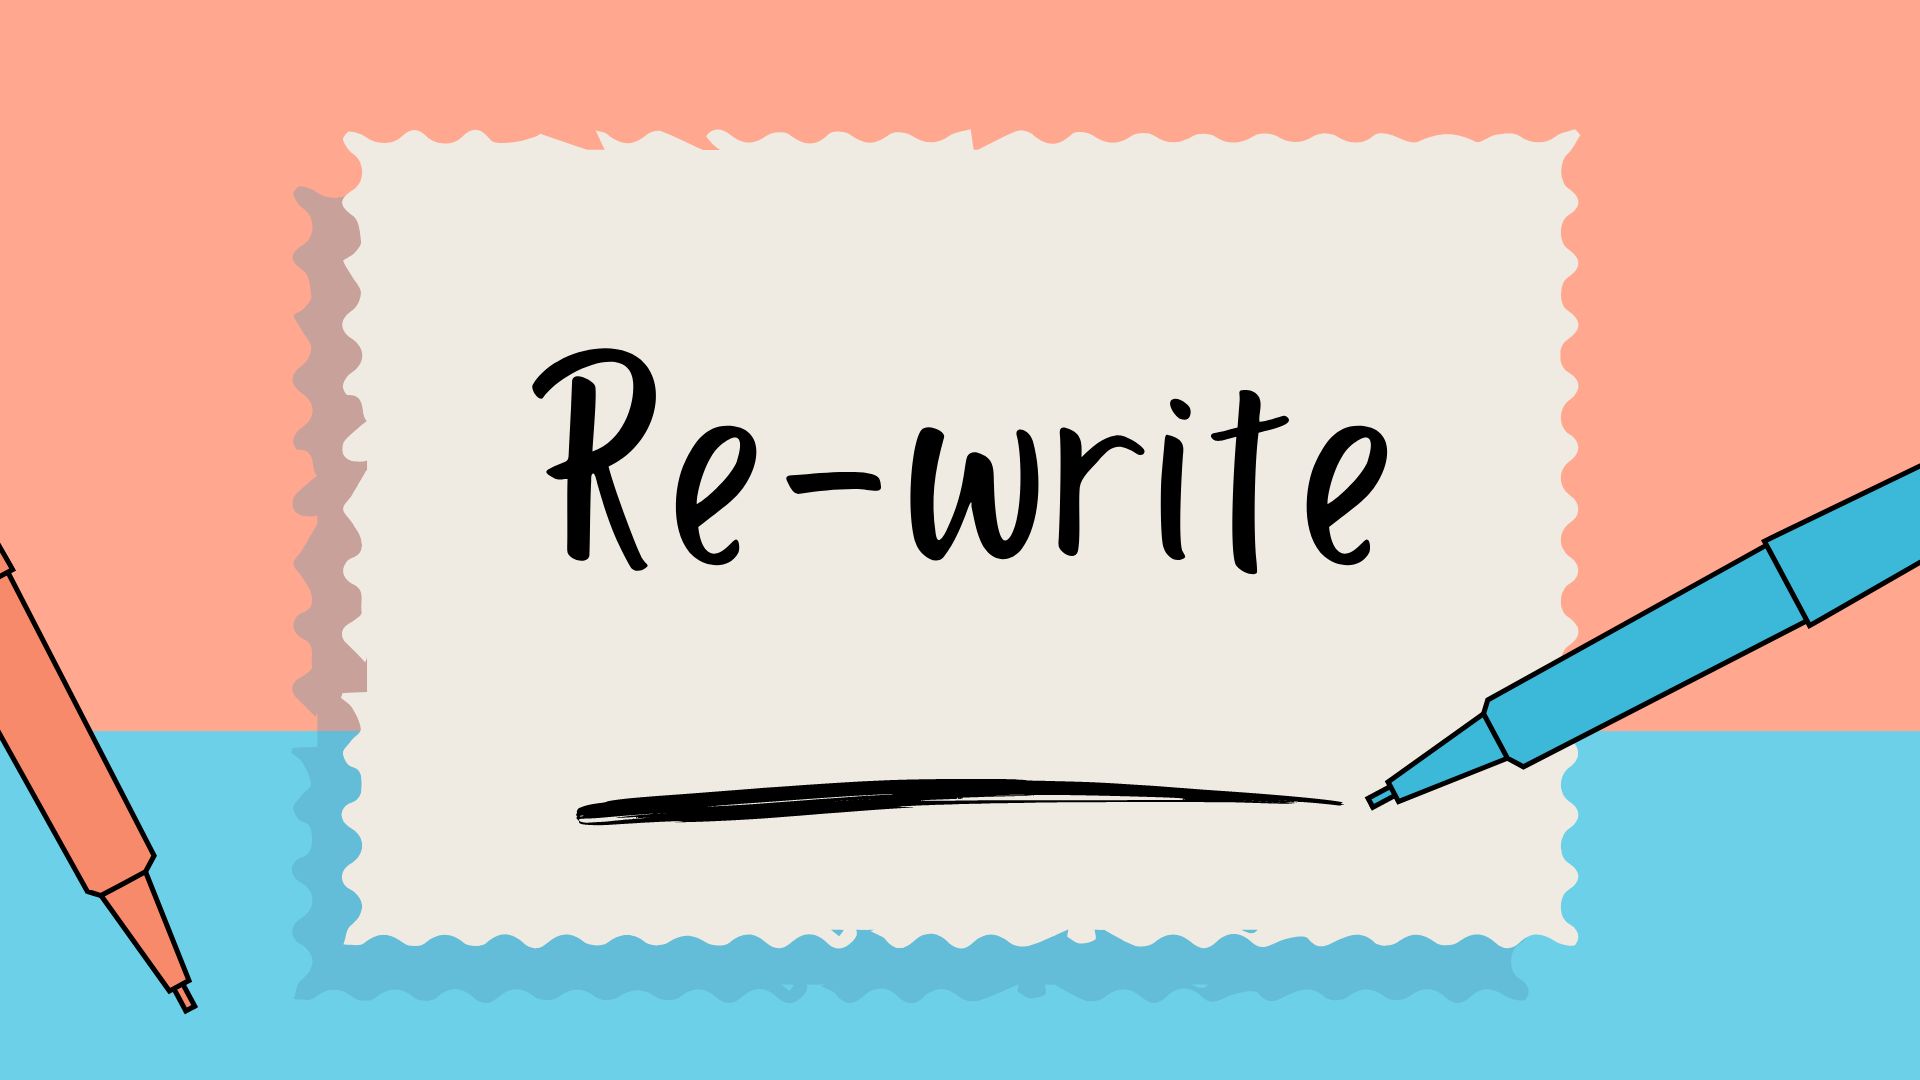 Re-write